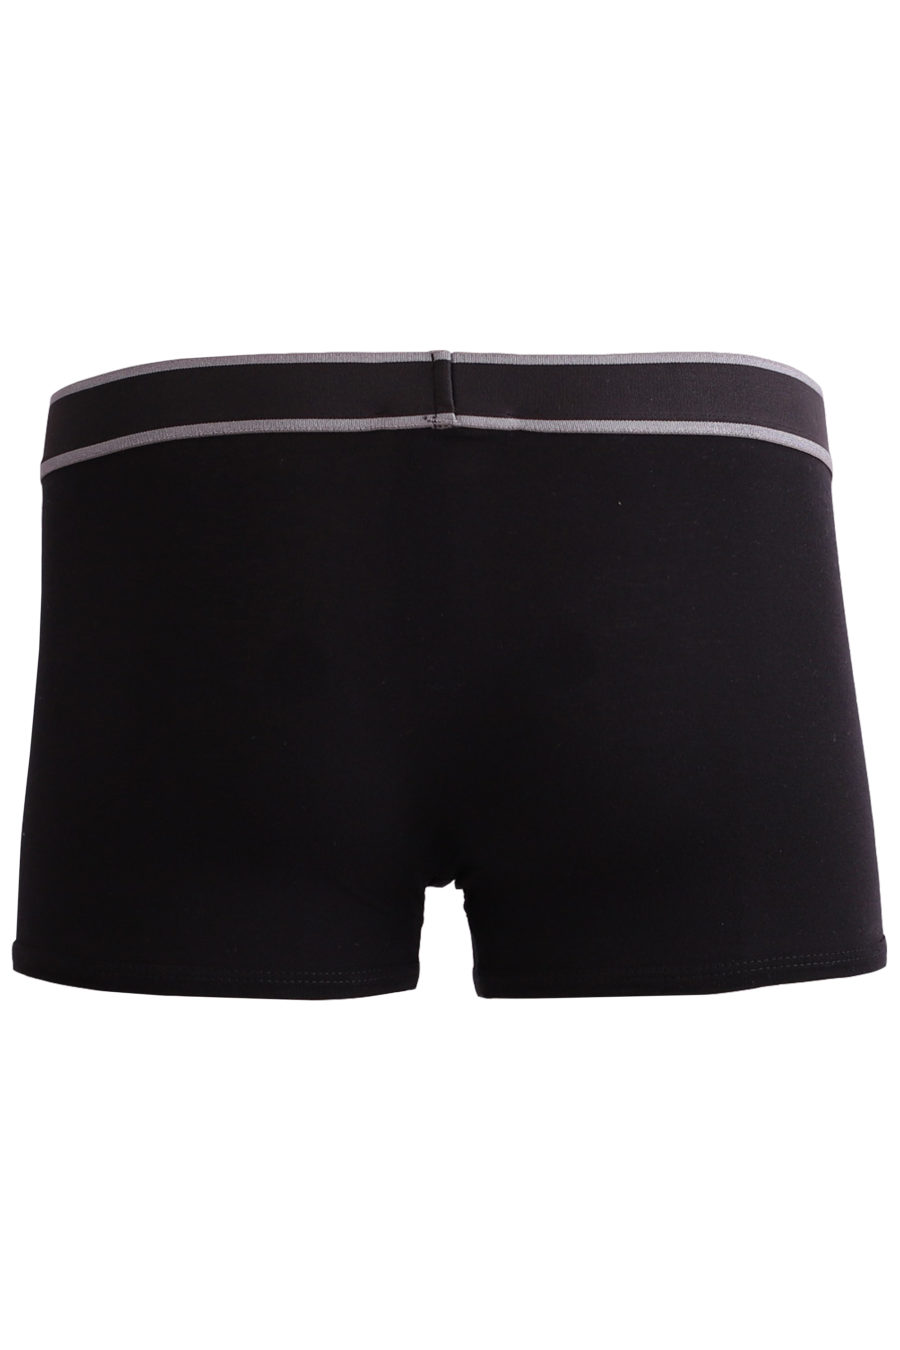 Black boxer shorts with silver logo on waistband - 76a027981c9e9faa7b1ce96a02540f7323bc2b81